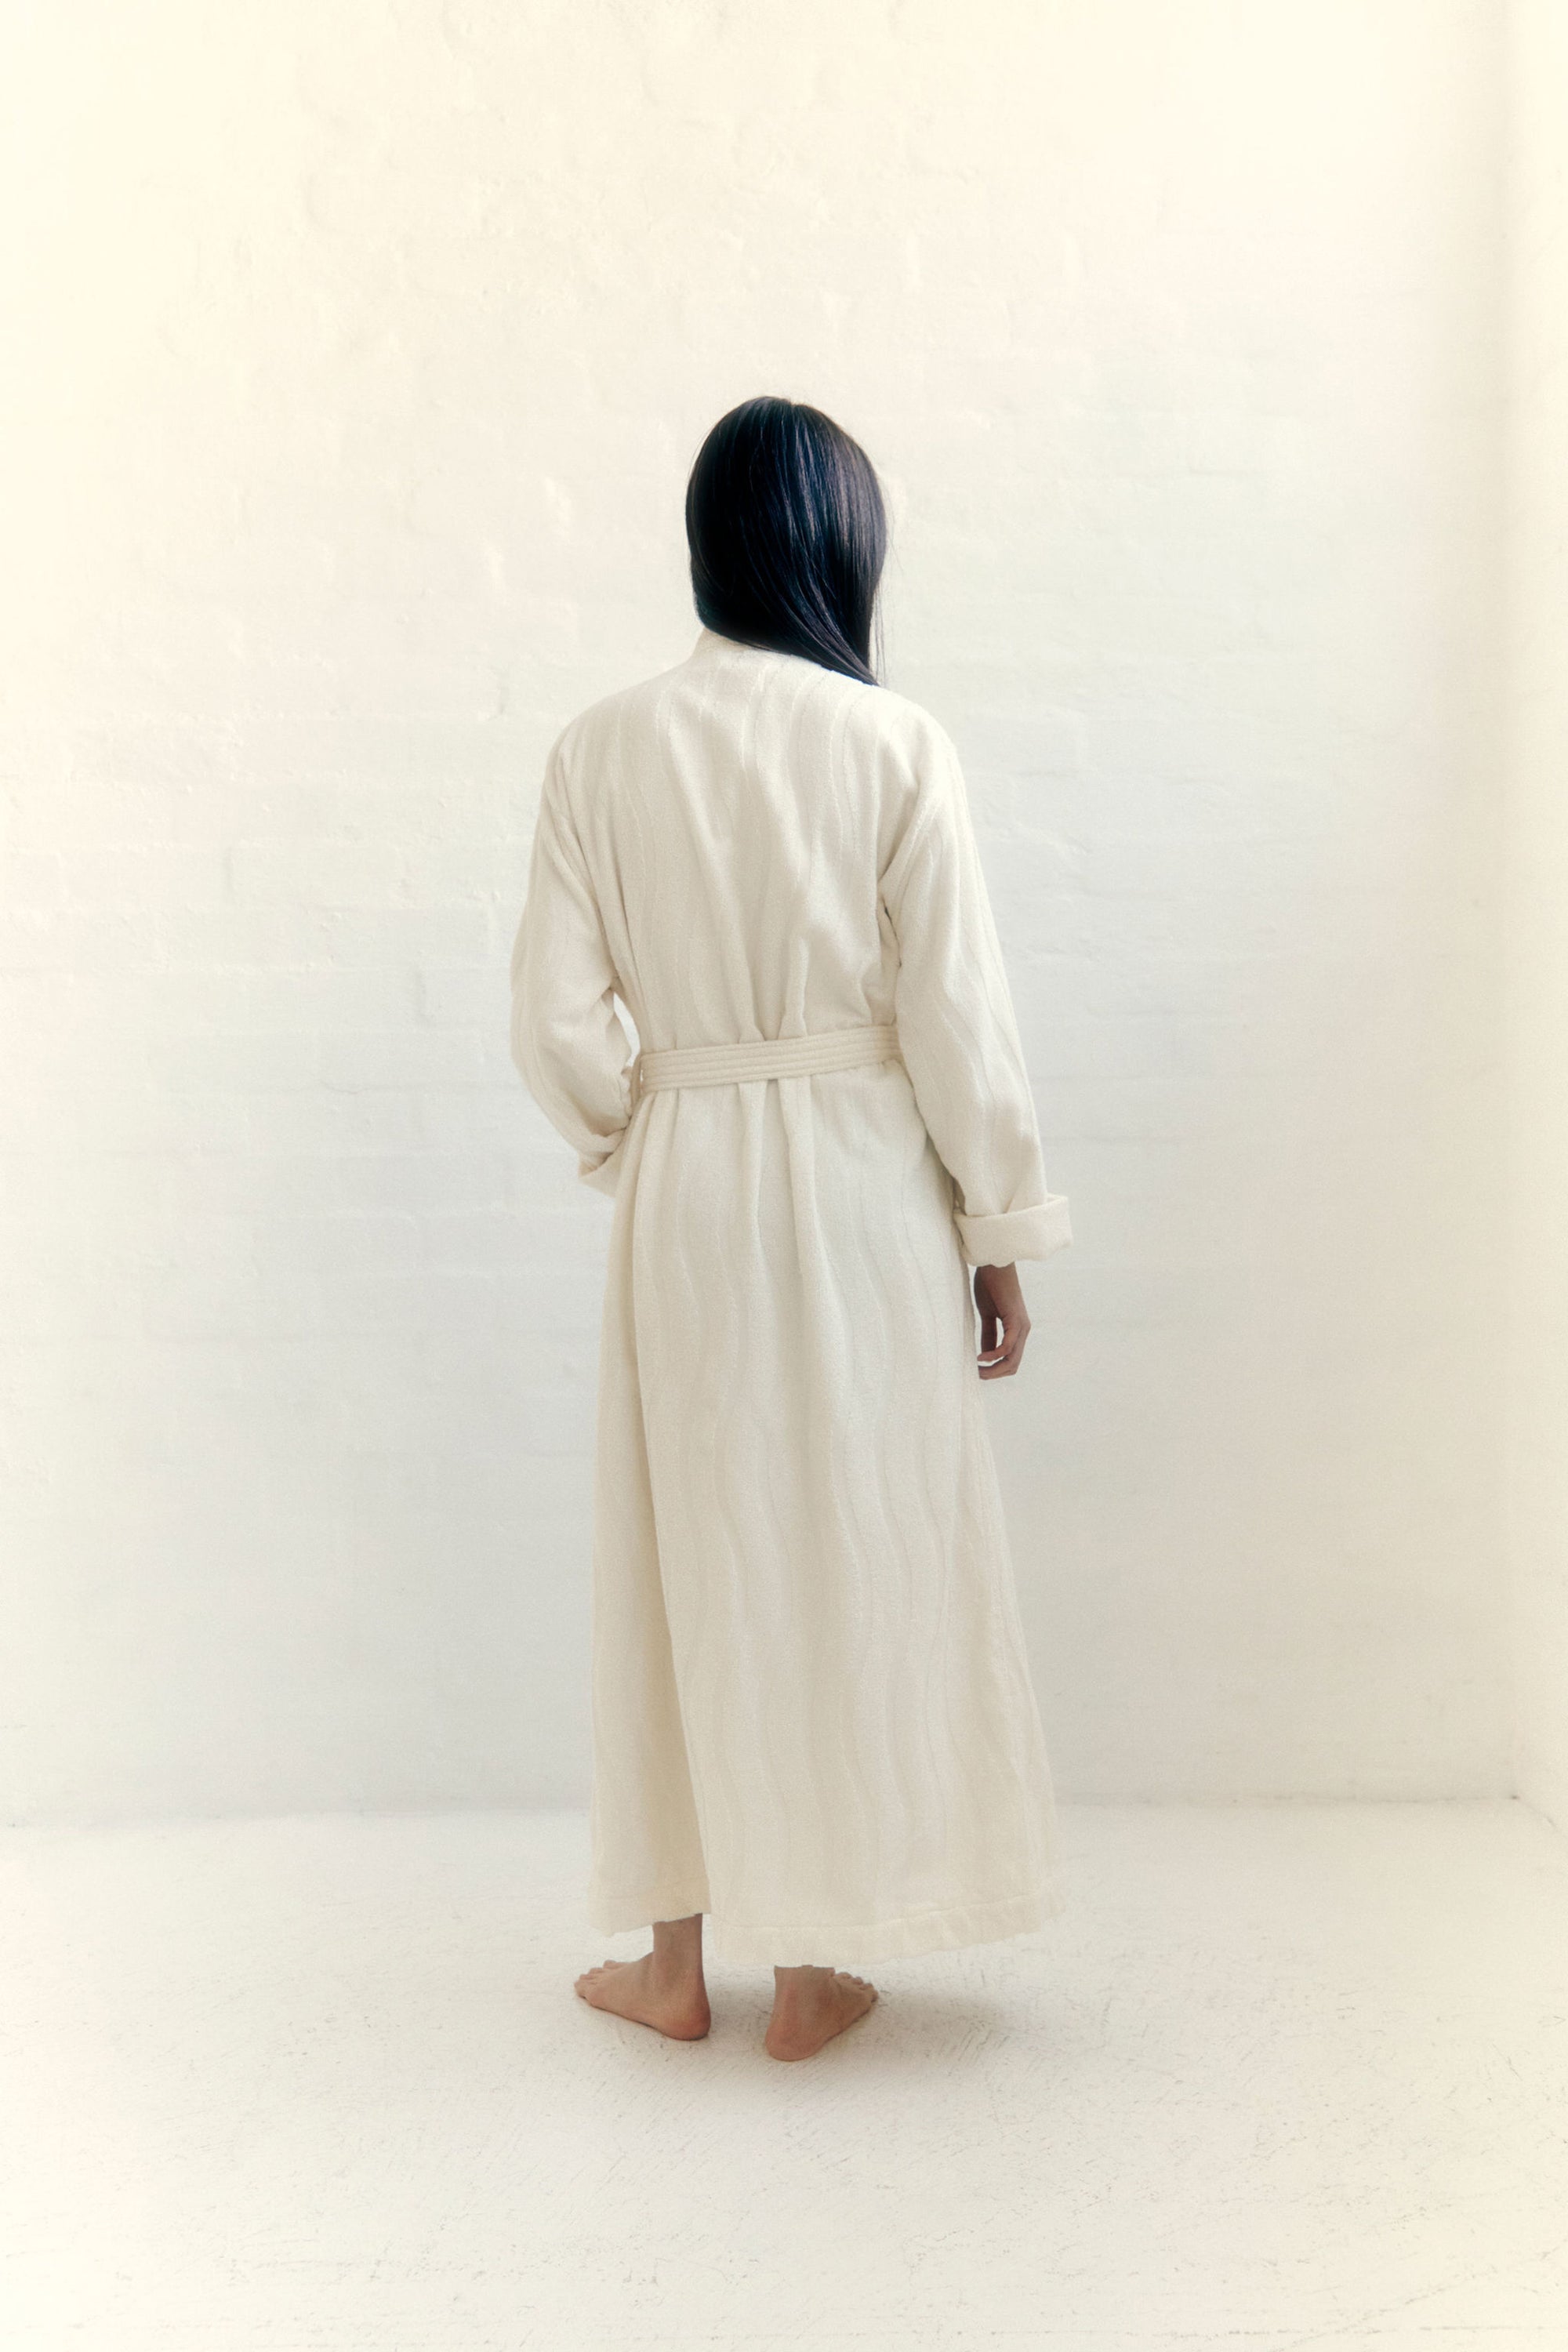 Sulis Bath Robe in Ivory by Baina